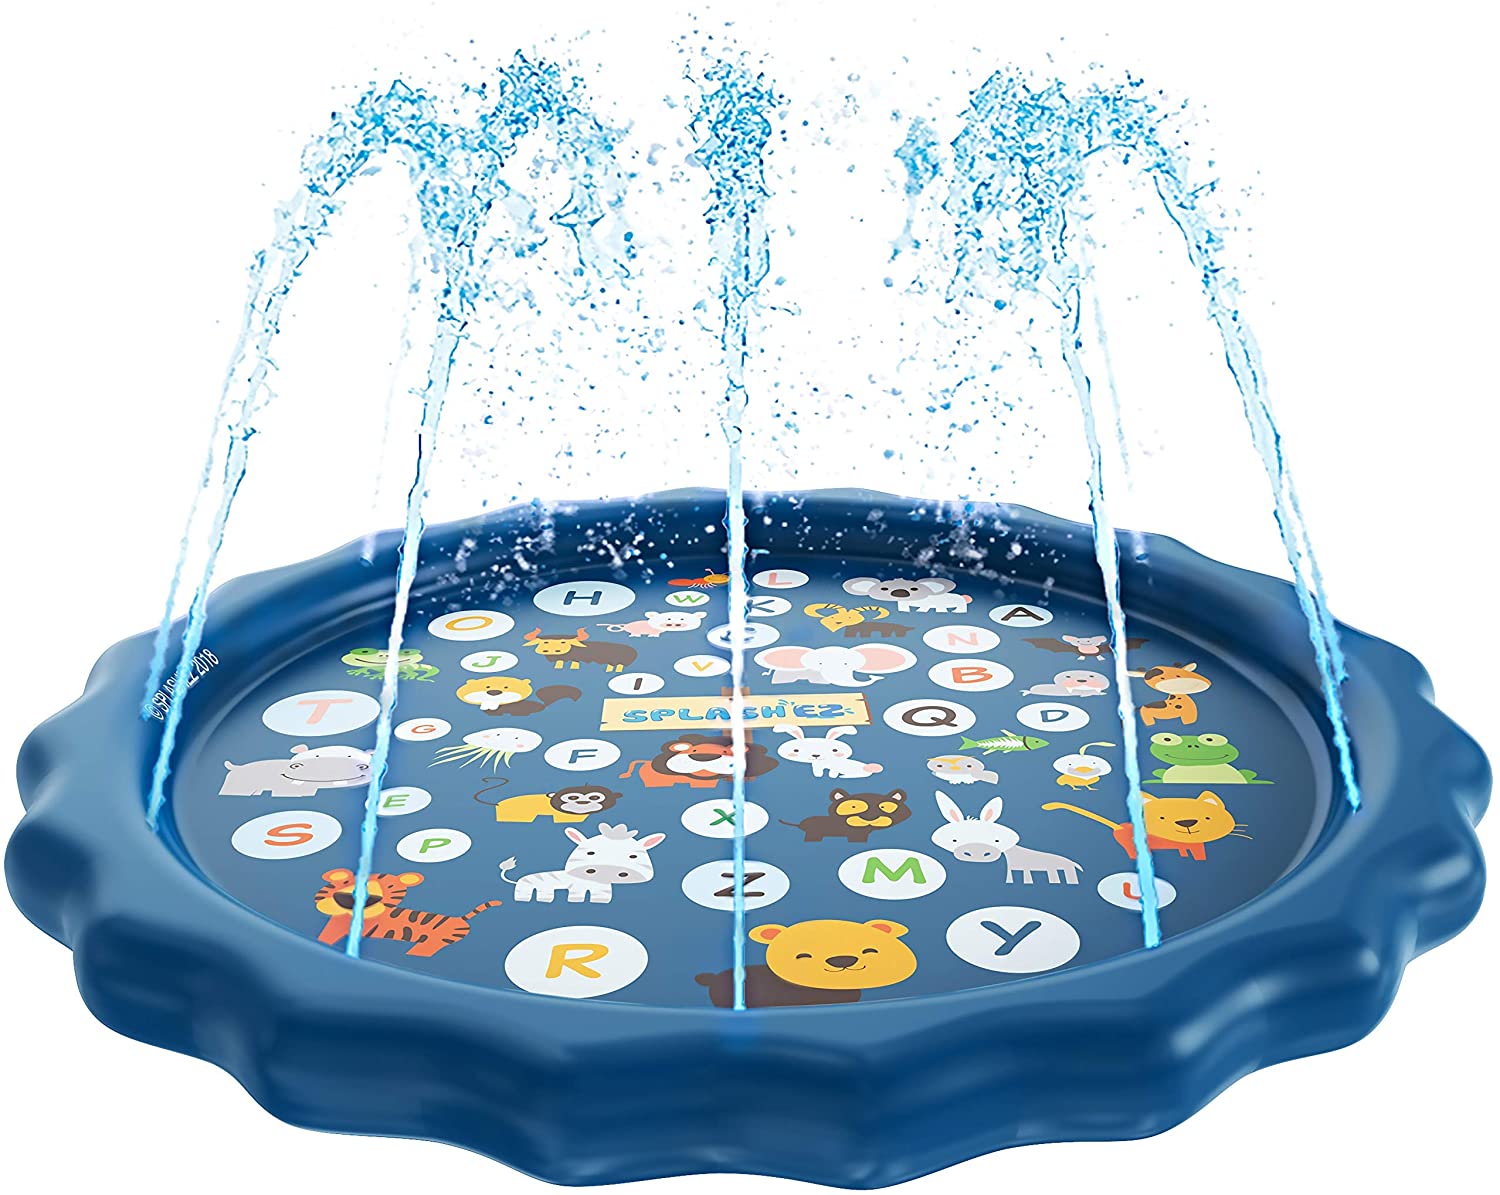 Details about   Large Kids Inflatable Water Spray Pad Sprinkler Mat Round Water Splash Play Pool 